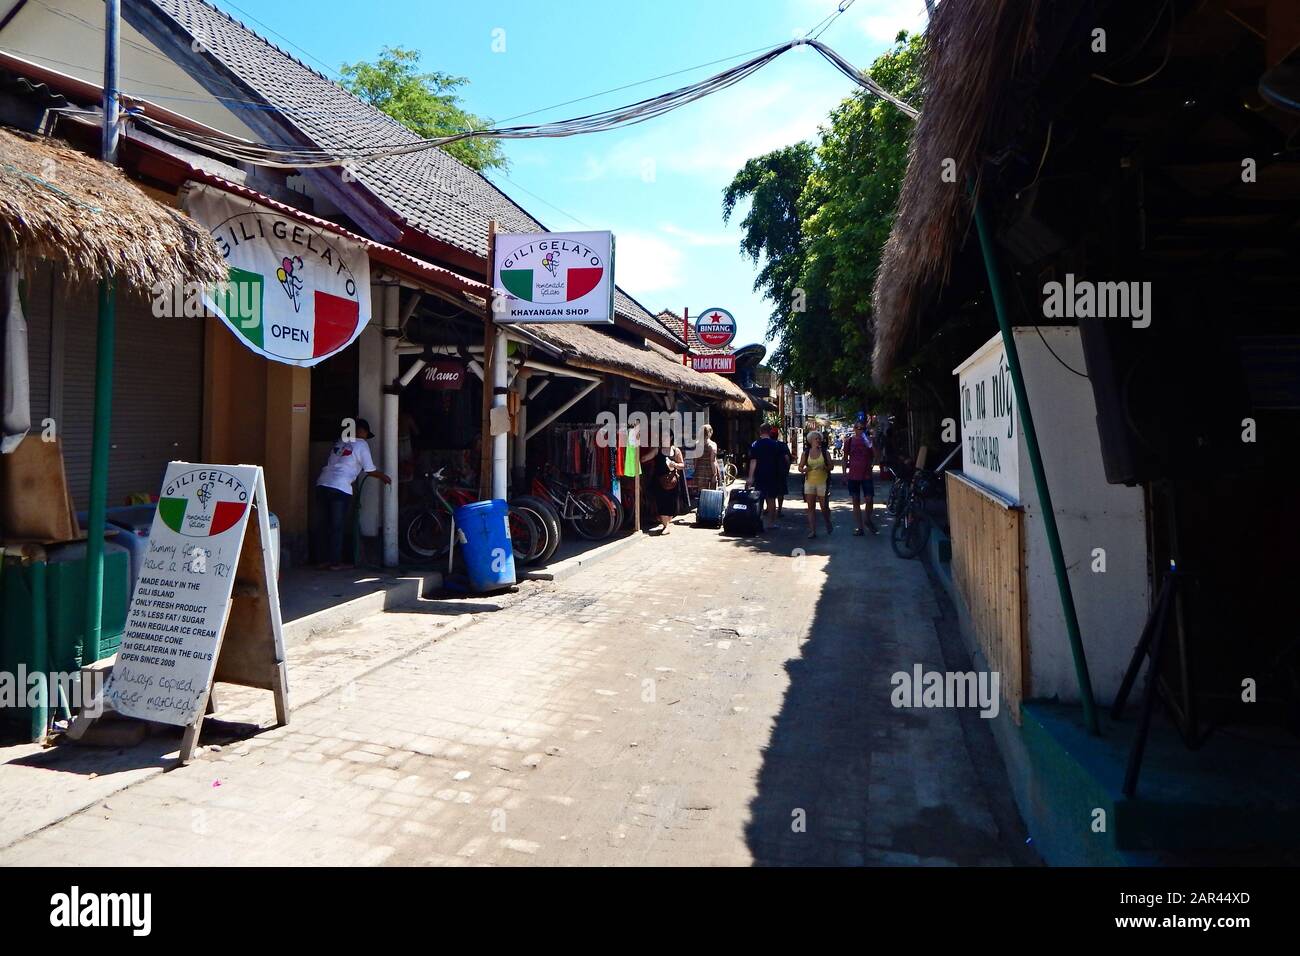 GILI TRAWANGAN, INDONESIA - Jun 05, 2019: The main street in Gili Trawangan, this is a popular tourist area with many shops and beach bars. Stock Photo